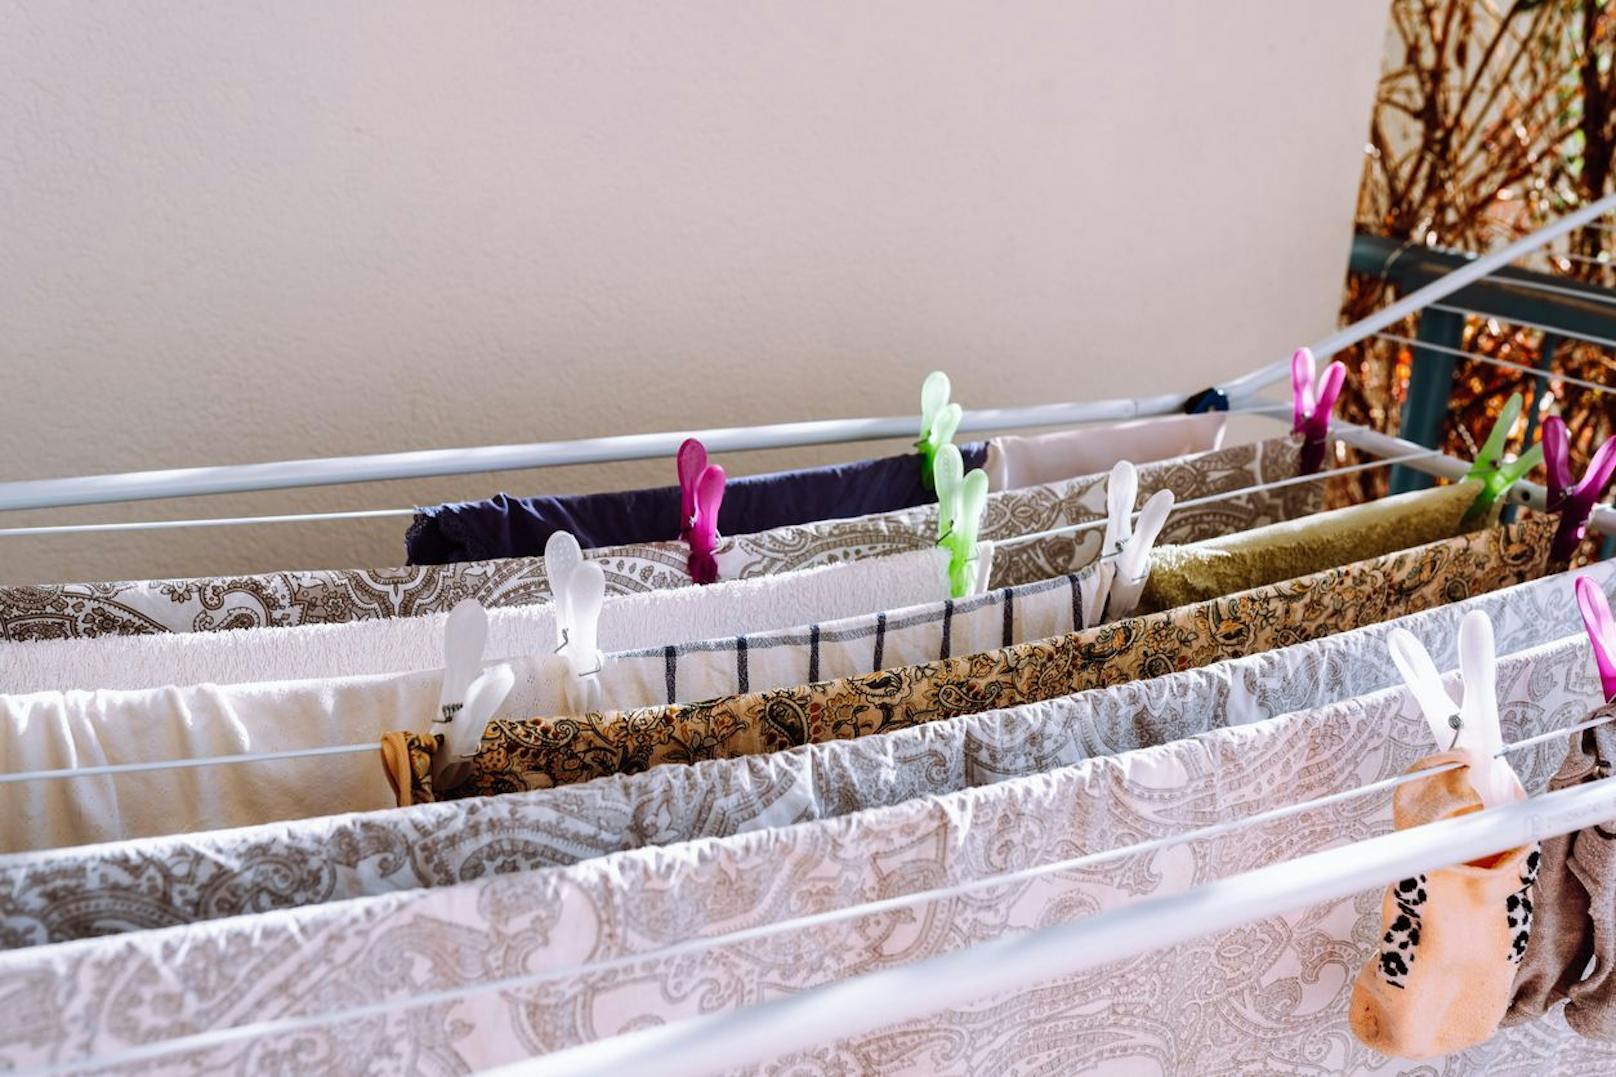 "Schamlos" – Frau soll Wäsche nicht am Balkon trocknen